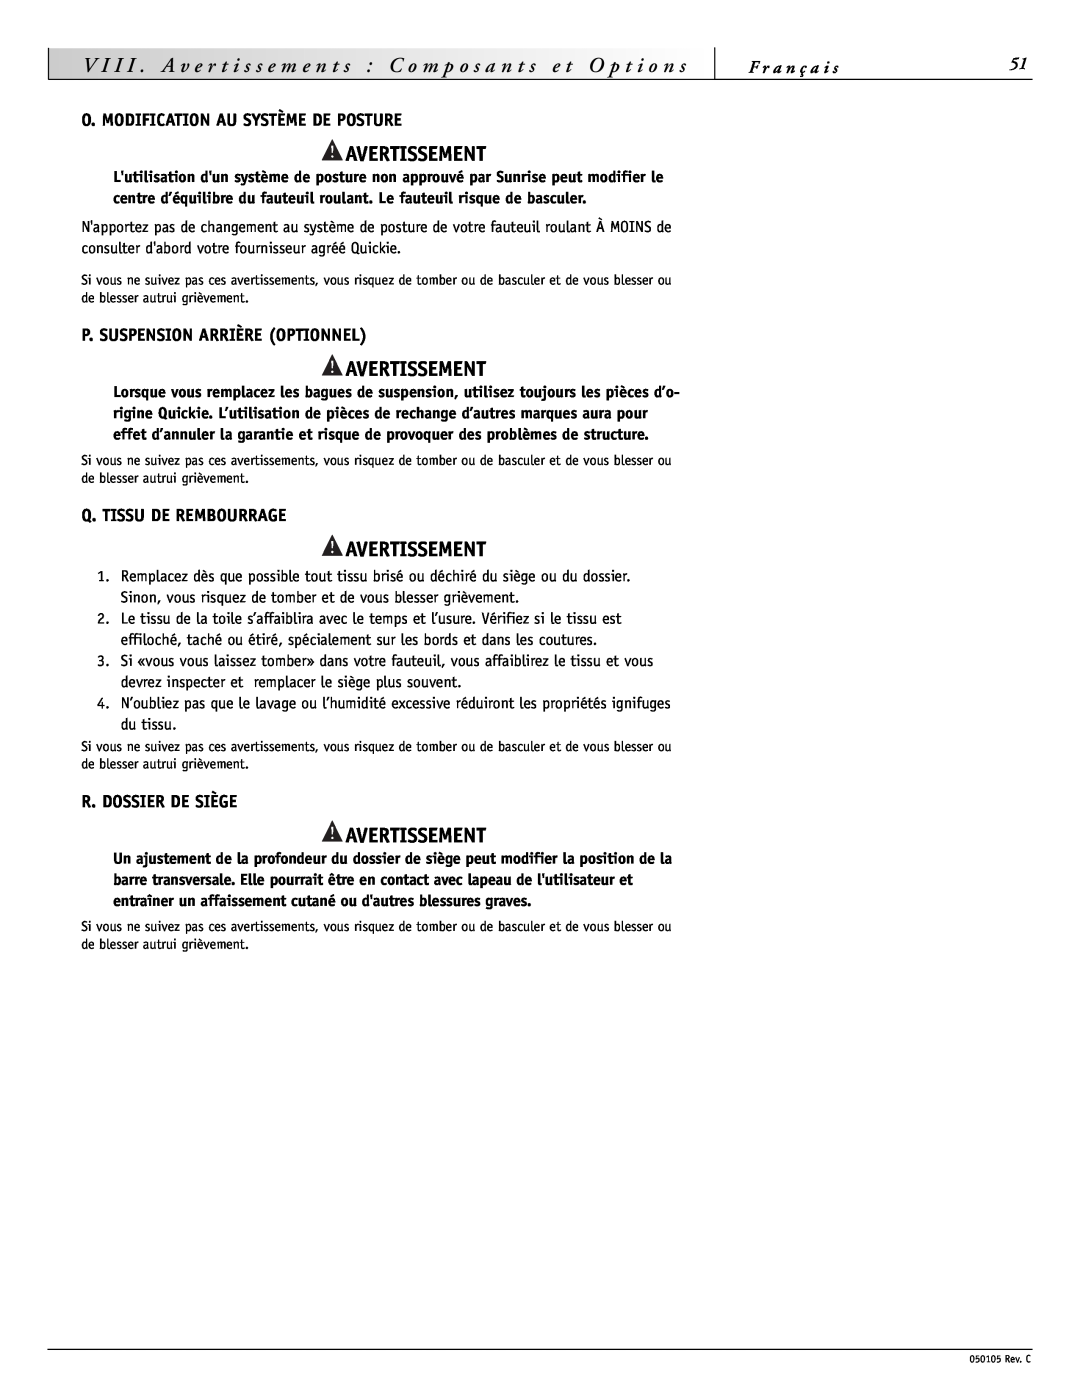 Sunrise Medical GT instruction manual t i o, Avertissement 